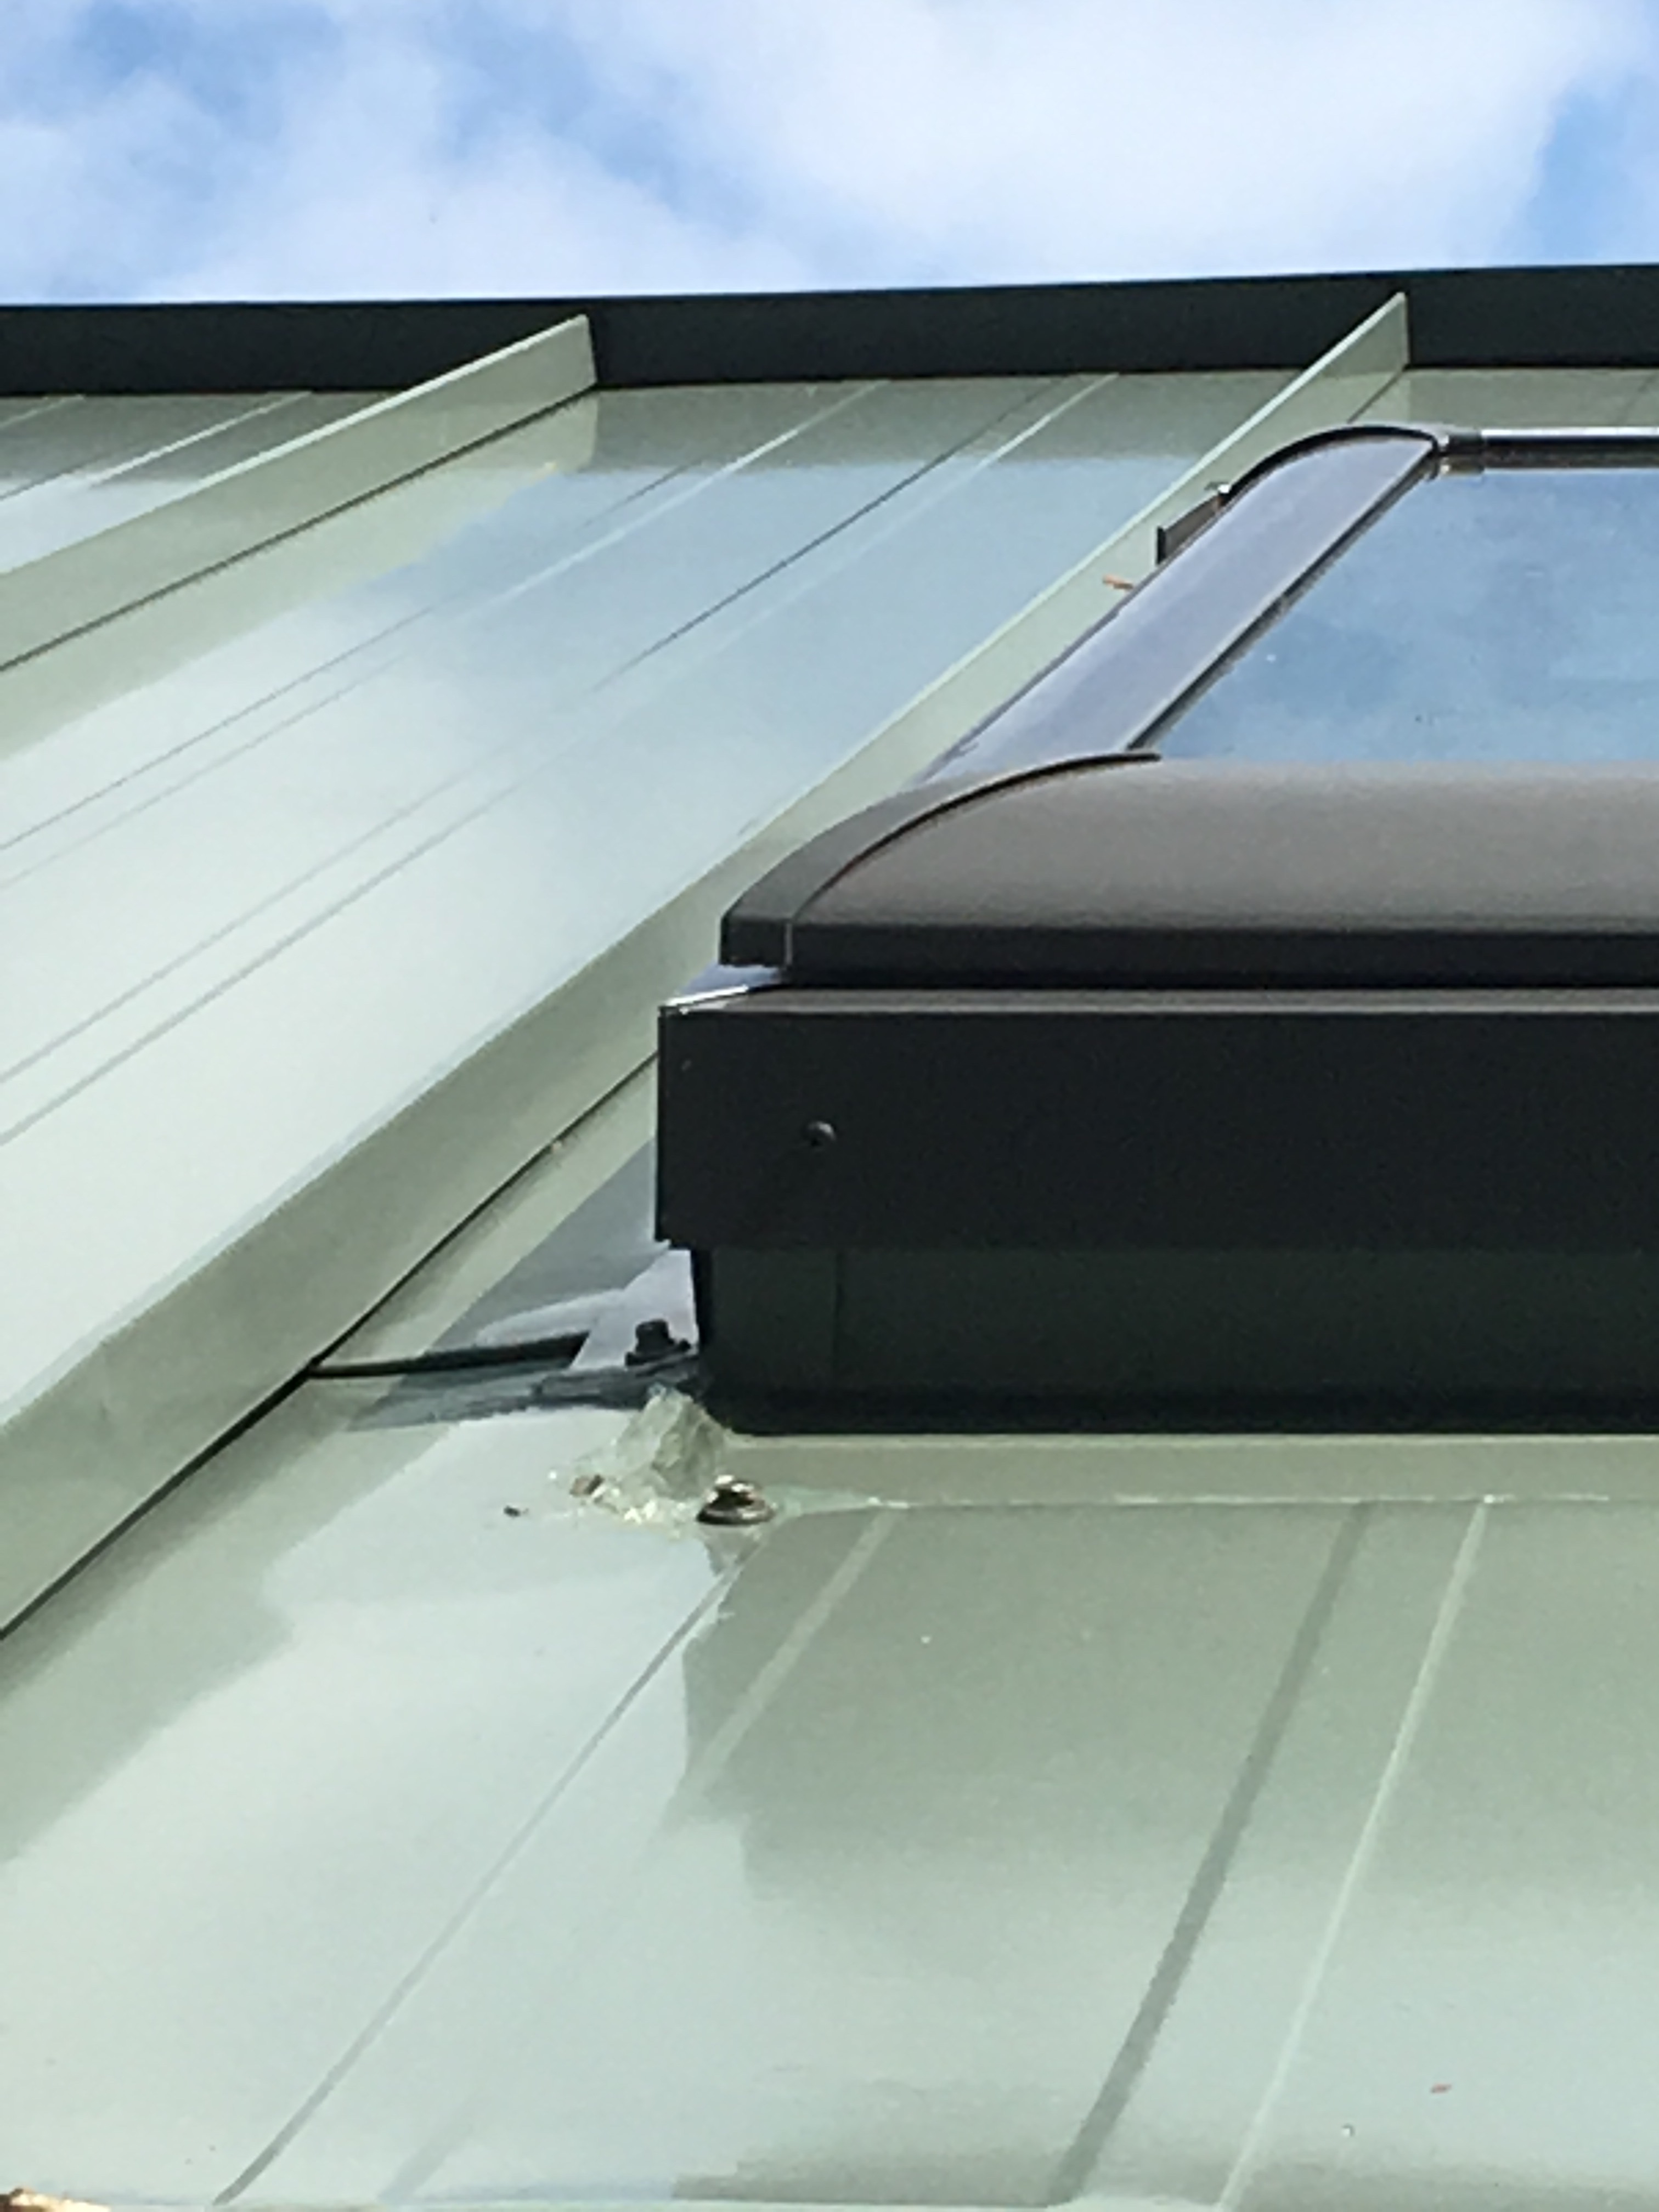 Installation around skylight workmanship questions: 